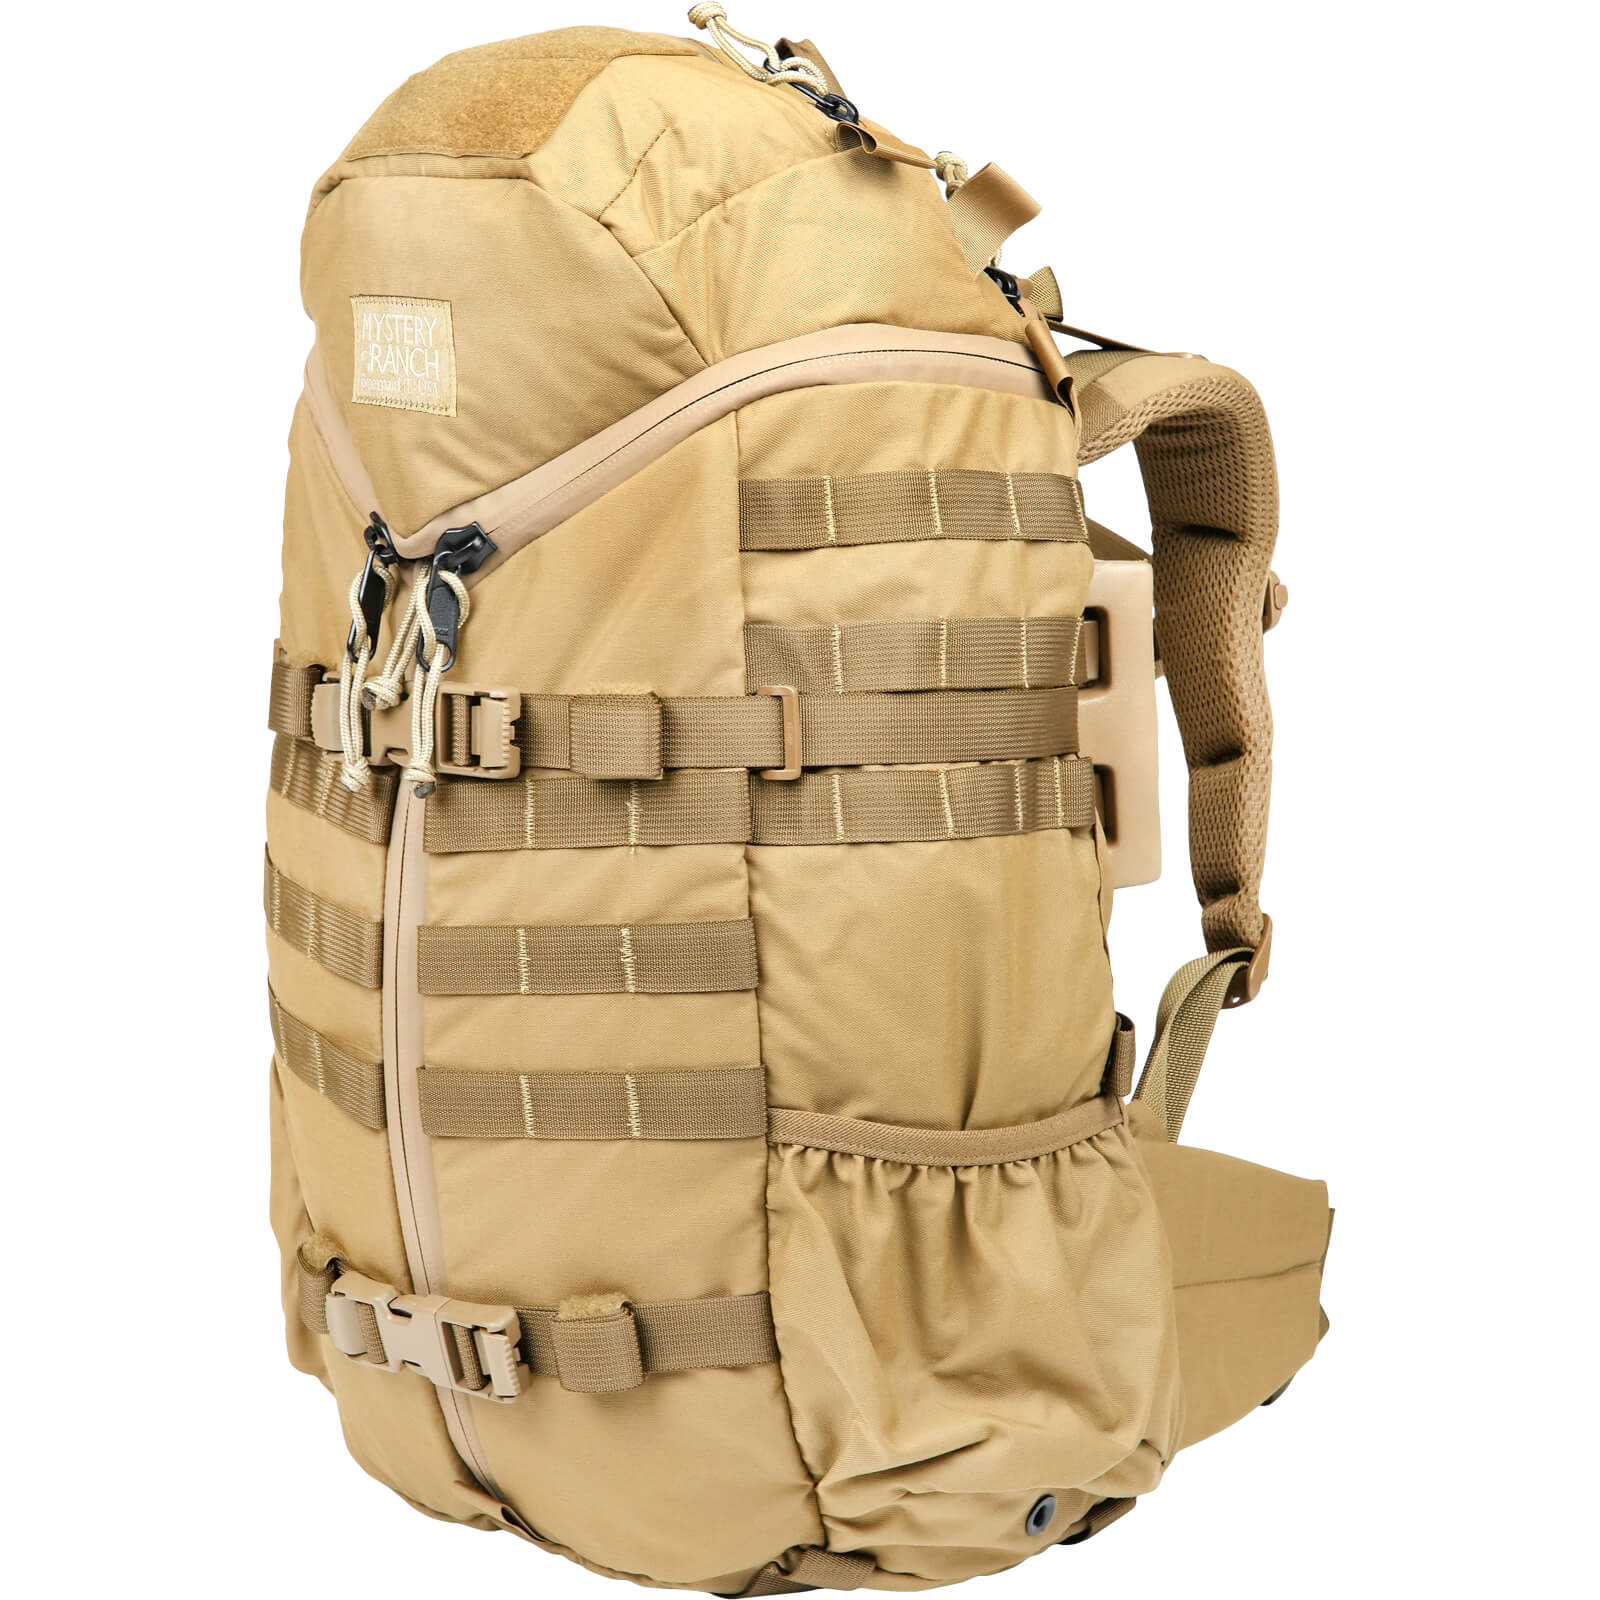 3 Day Assault BVS Pack | MYSTERY RANCH Backpacks